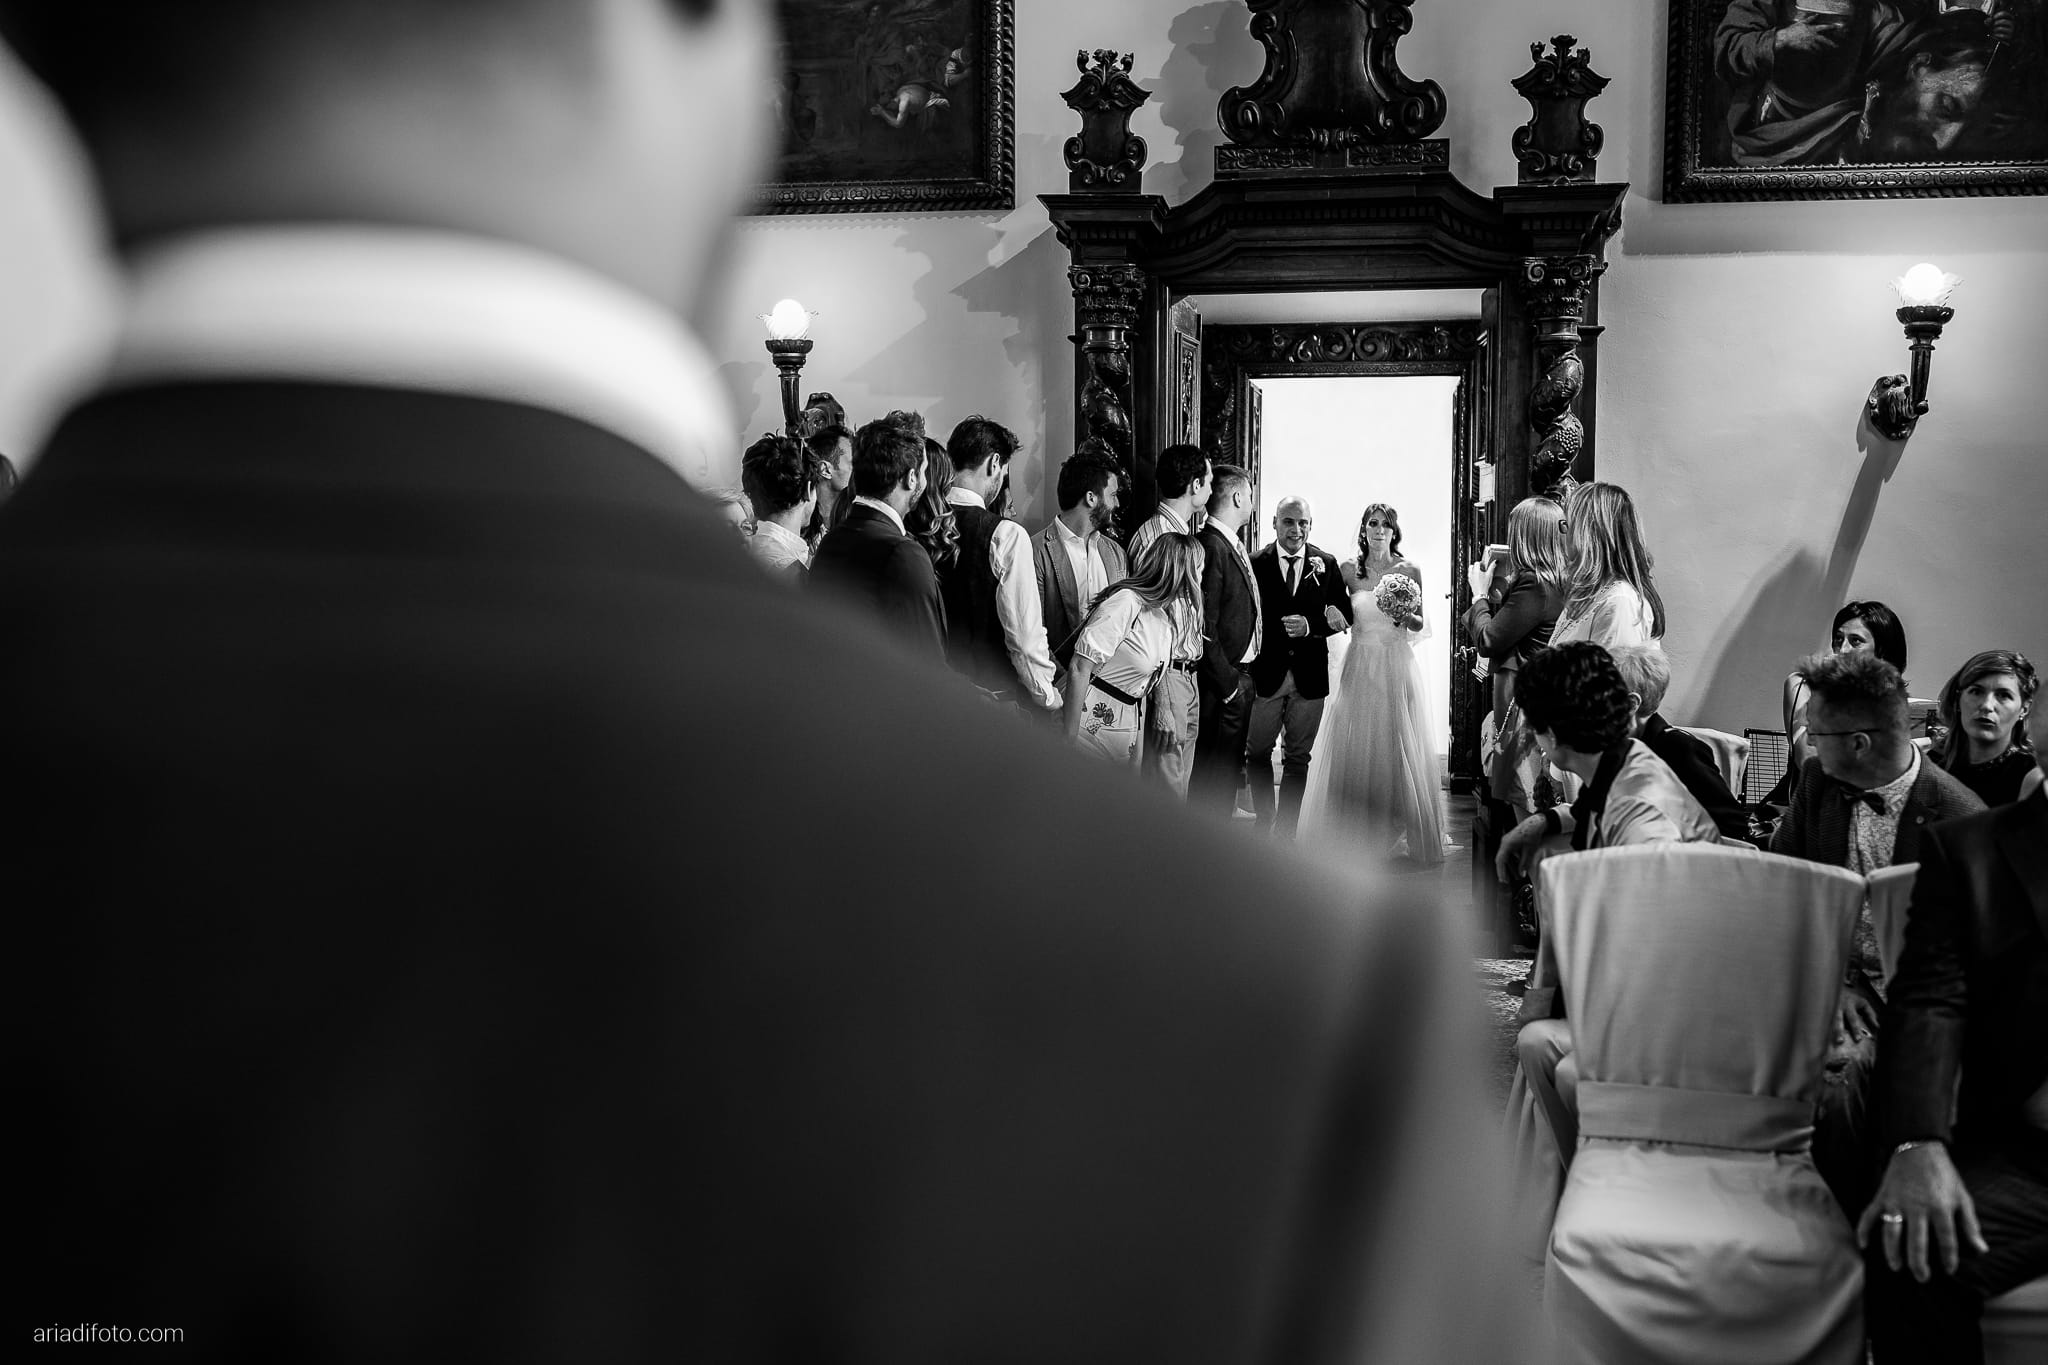 Marina Stefano Matrimonio Castello San Giusto Molo IV Trieste cerimonia civile ingresso sposa